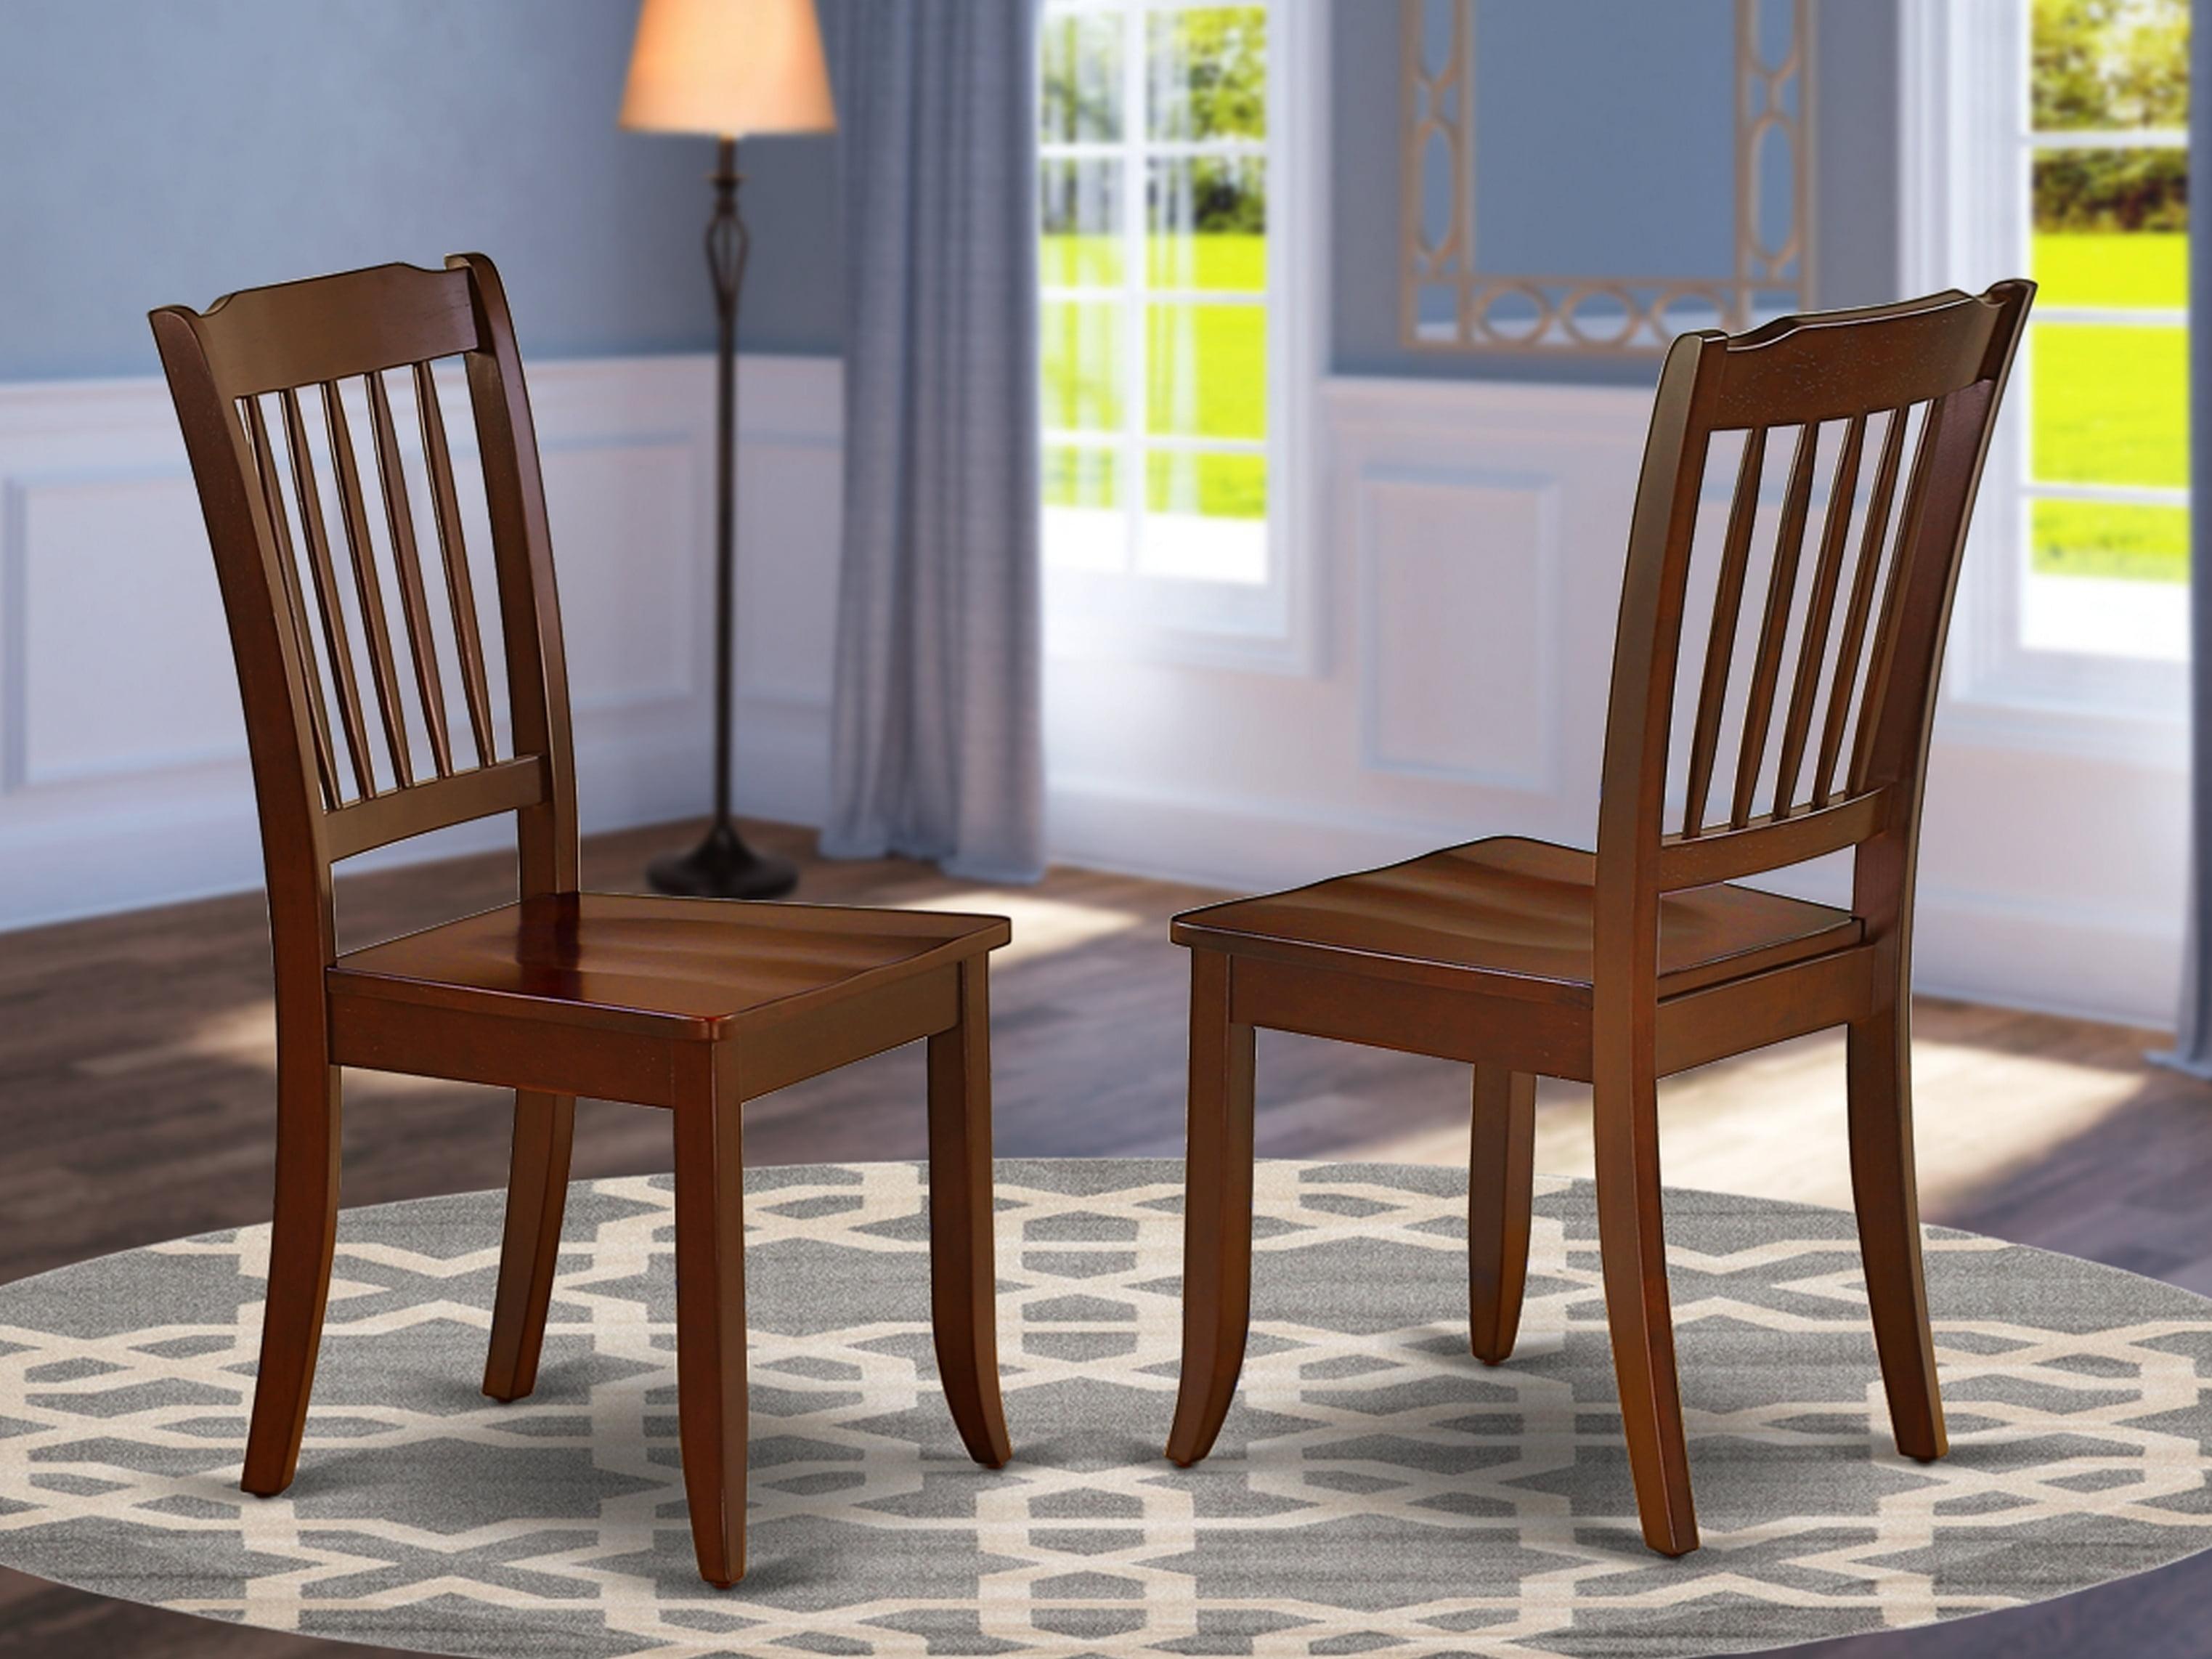 Danbury 38" Mahogany and Black Slatted Wood Dining Chairs - Set of 2